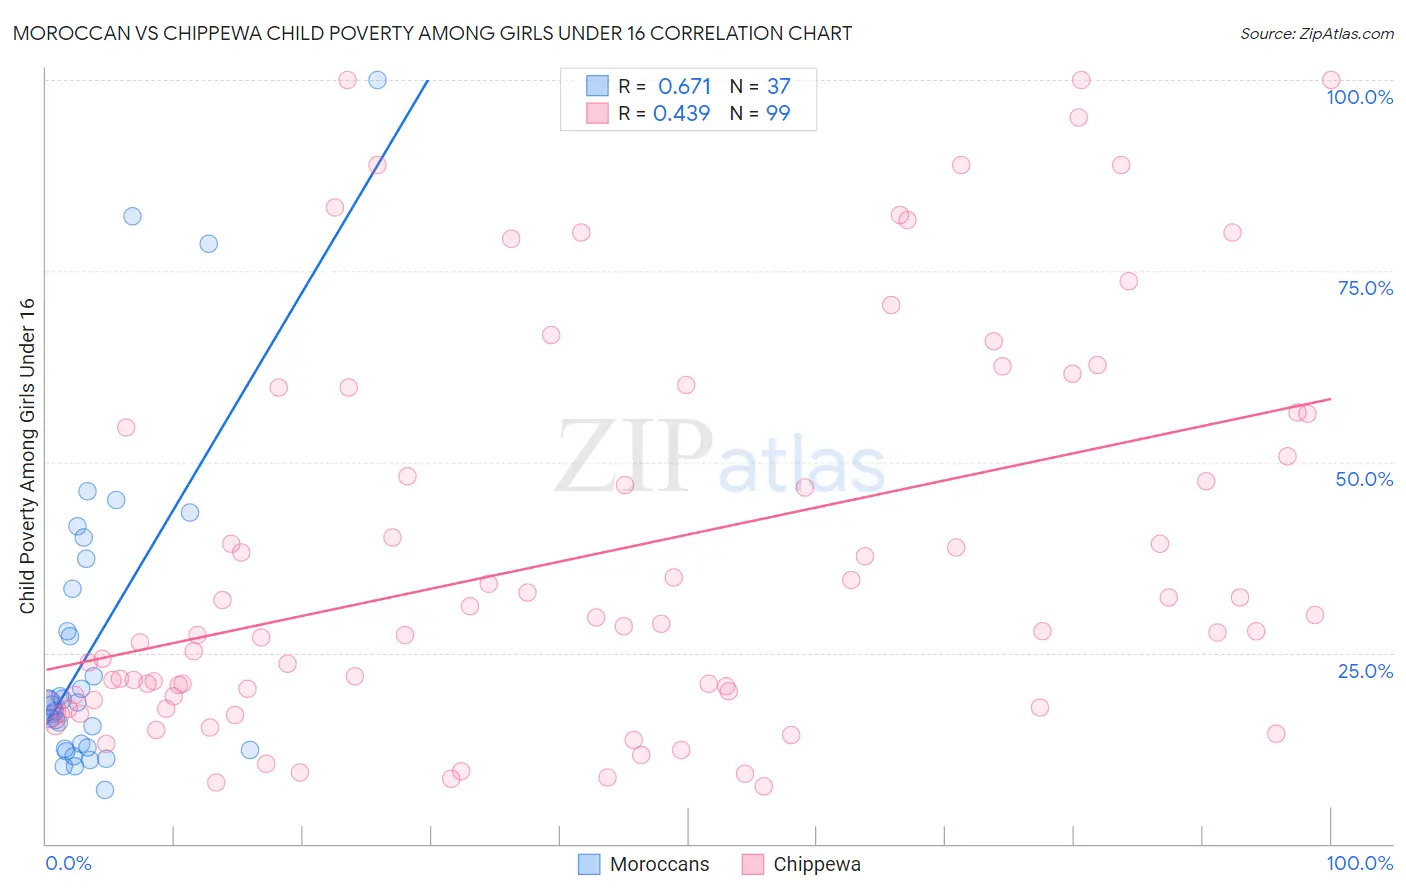 Moroccan vs Chippewa Child Poverty Among Girls Under 16